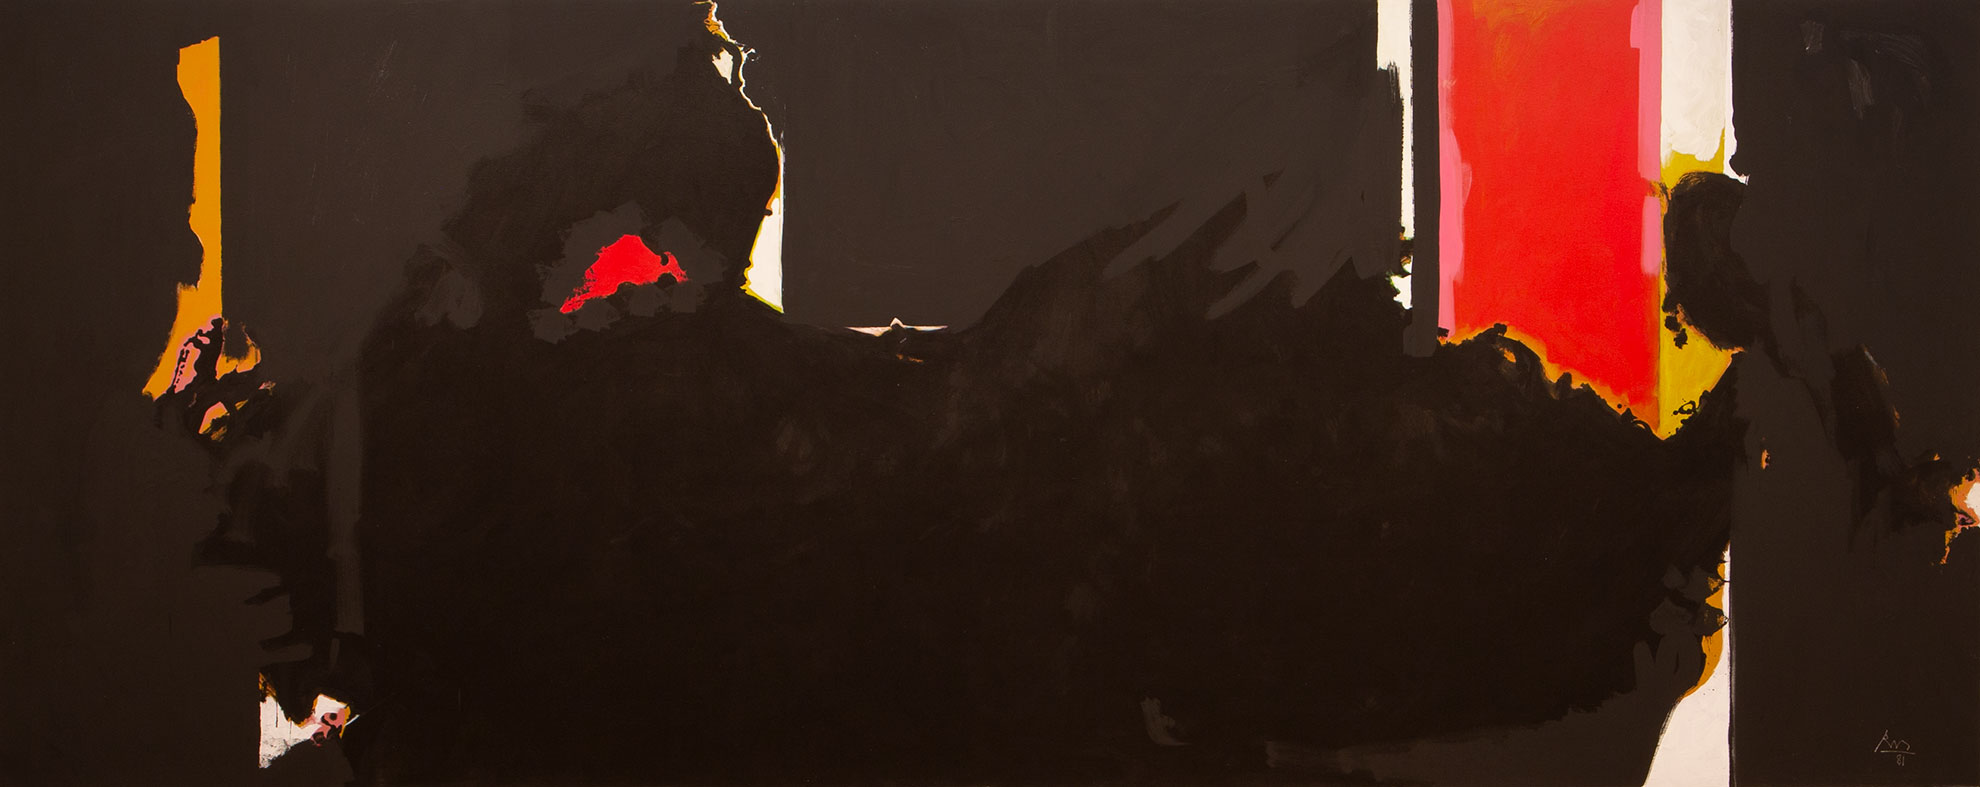 Robert Motherwell,  Face of the Night (For Octavio Paz), 1981